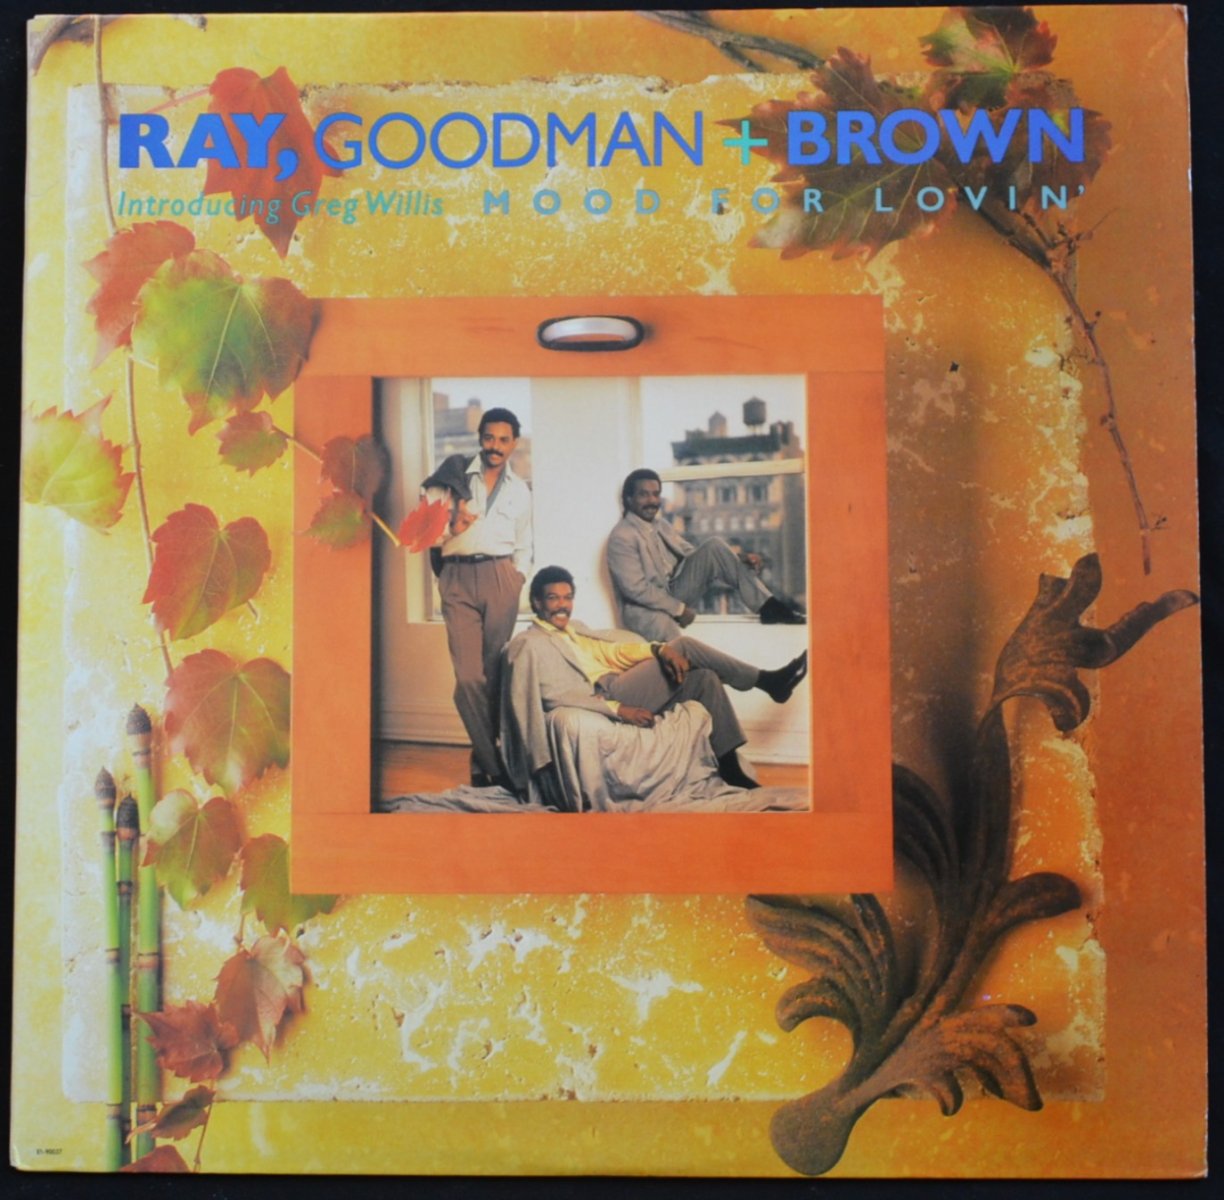 RAY, GOODMAN & BROWN INTRODUCING GREG WILLIS / MOOD FOR LOVIN' (LP)